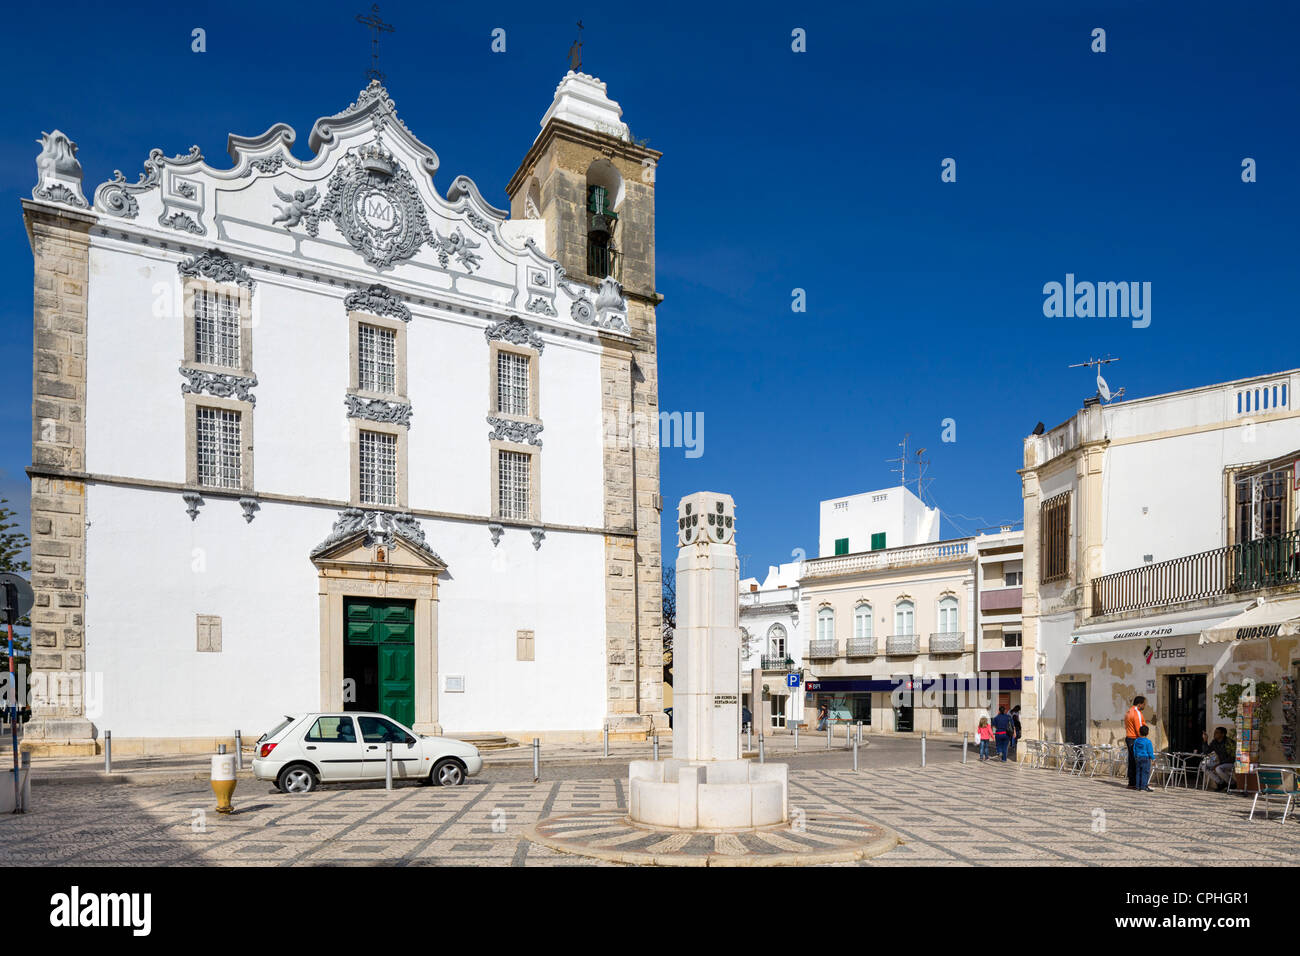 The church of Nossa Senhora do Rosario in the Praca da Restauracao in the old town centre, Olhao, Algarve, Portugal Stock Photo